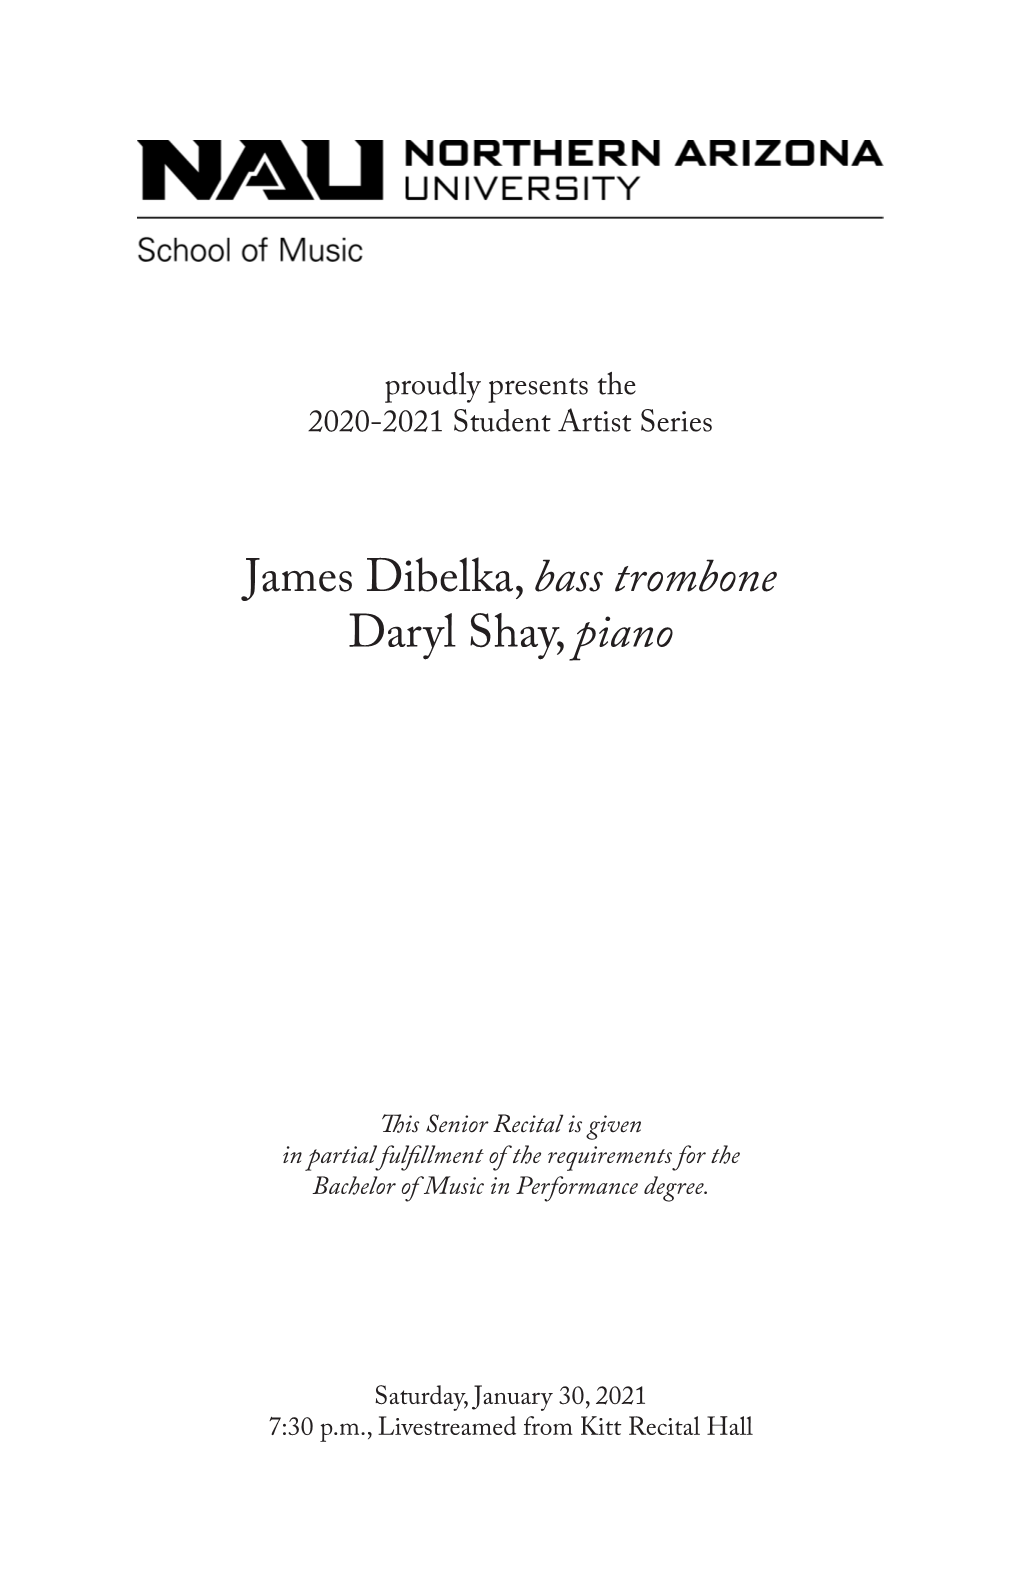 James Dibelka, Bass Trombone Daryl Shay, Piano